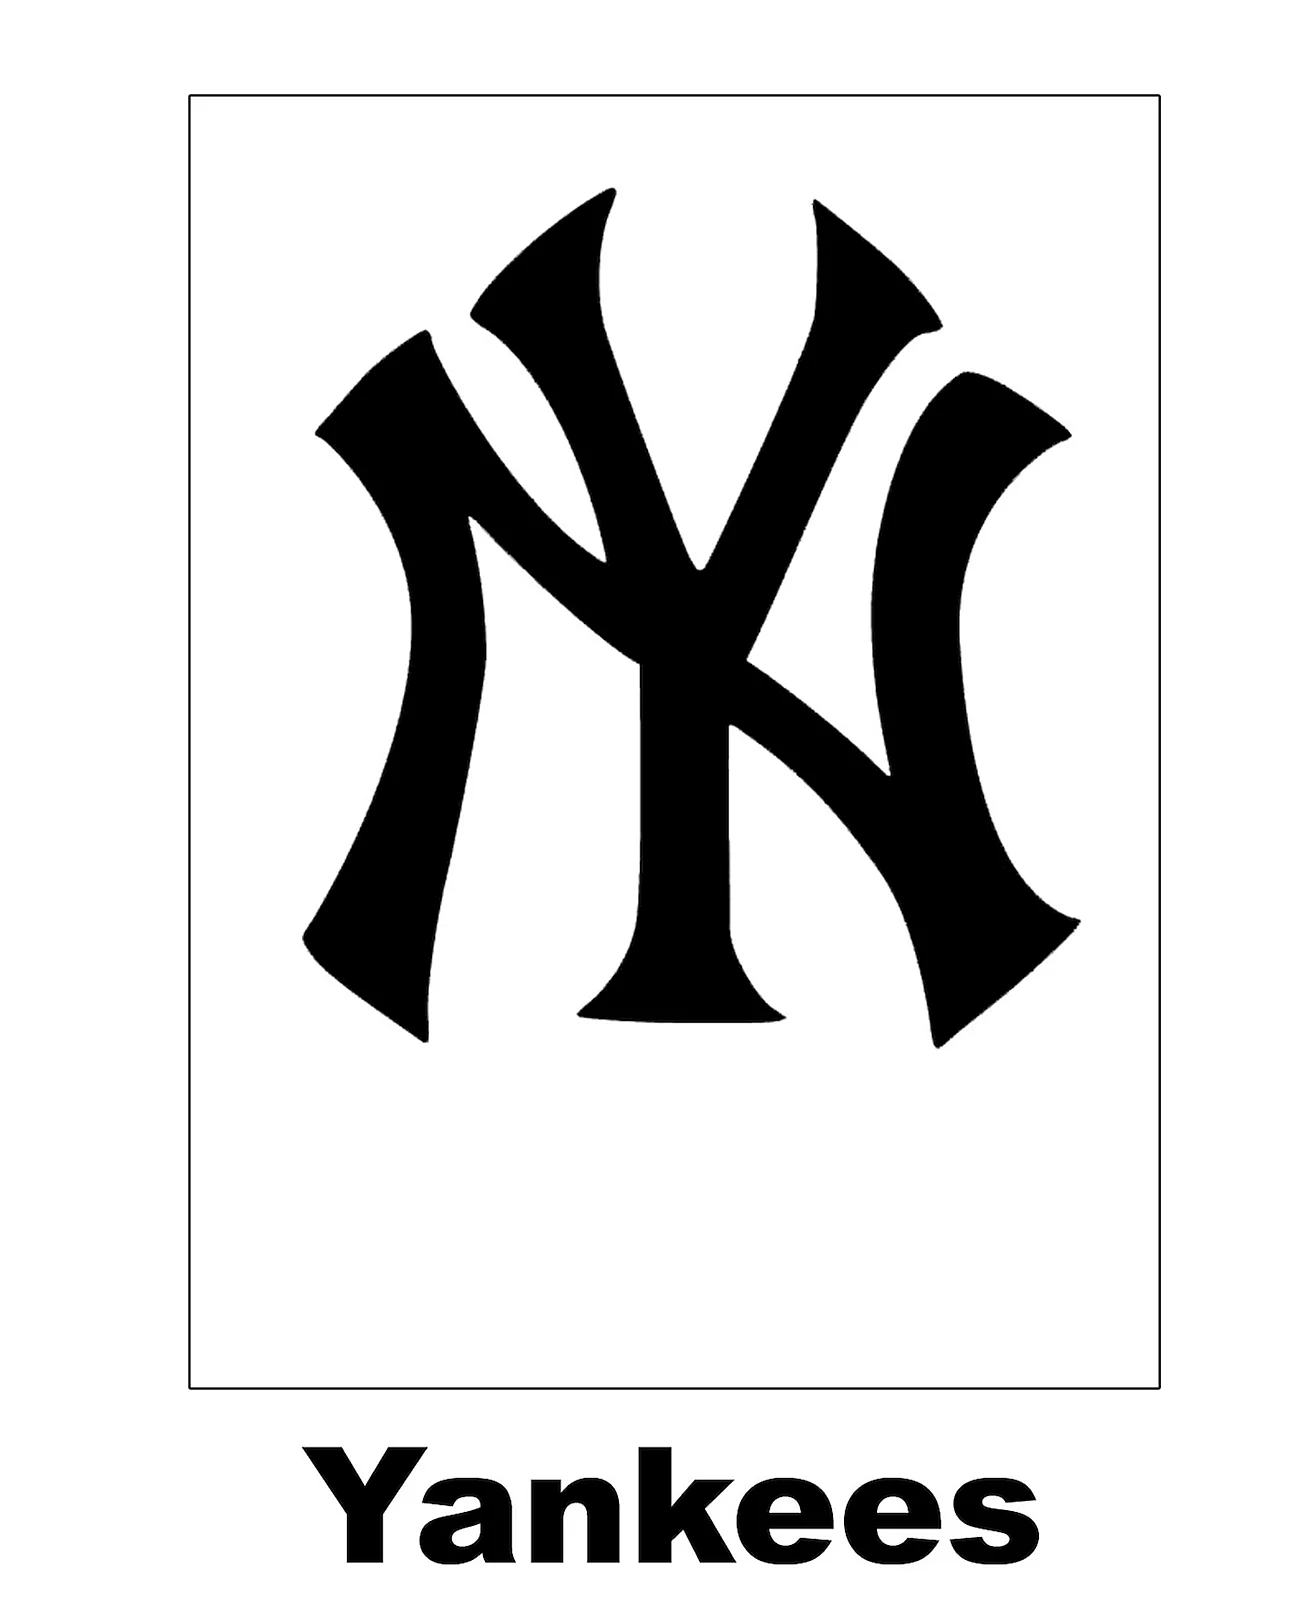 New York Yankees Wallpaper For iPhone